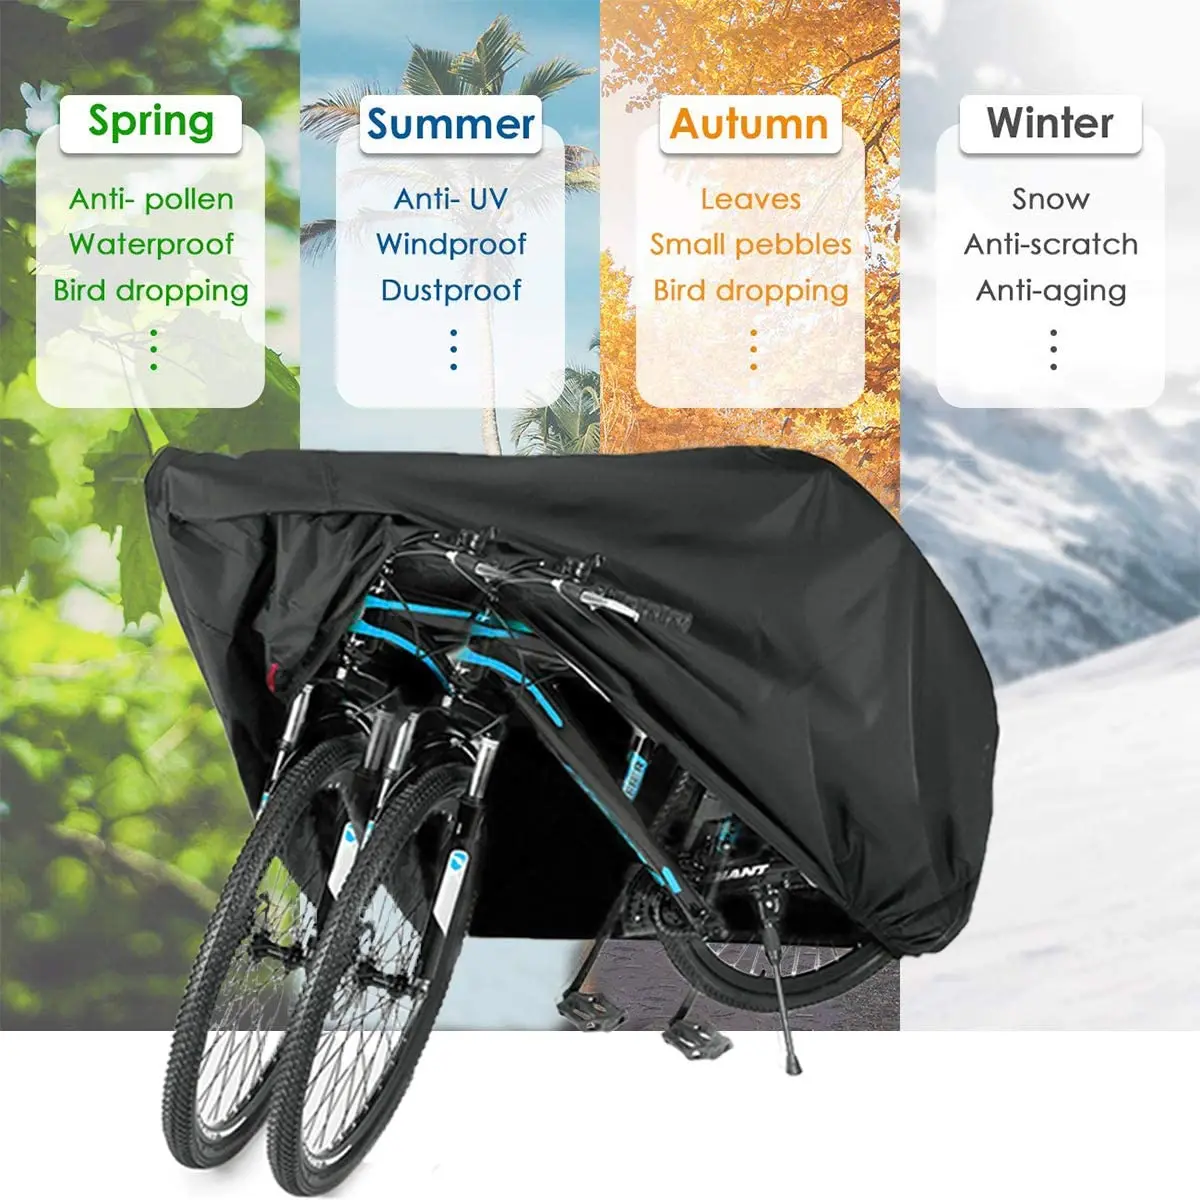 Waterproof Bicycle Cover Outdoor Rain/Sun Dustproof Protector For Mountain Bike